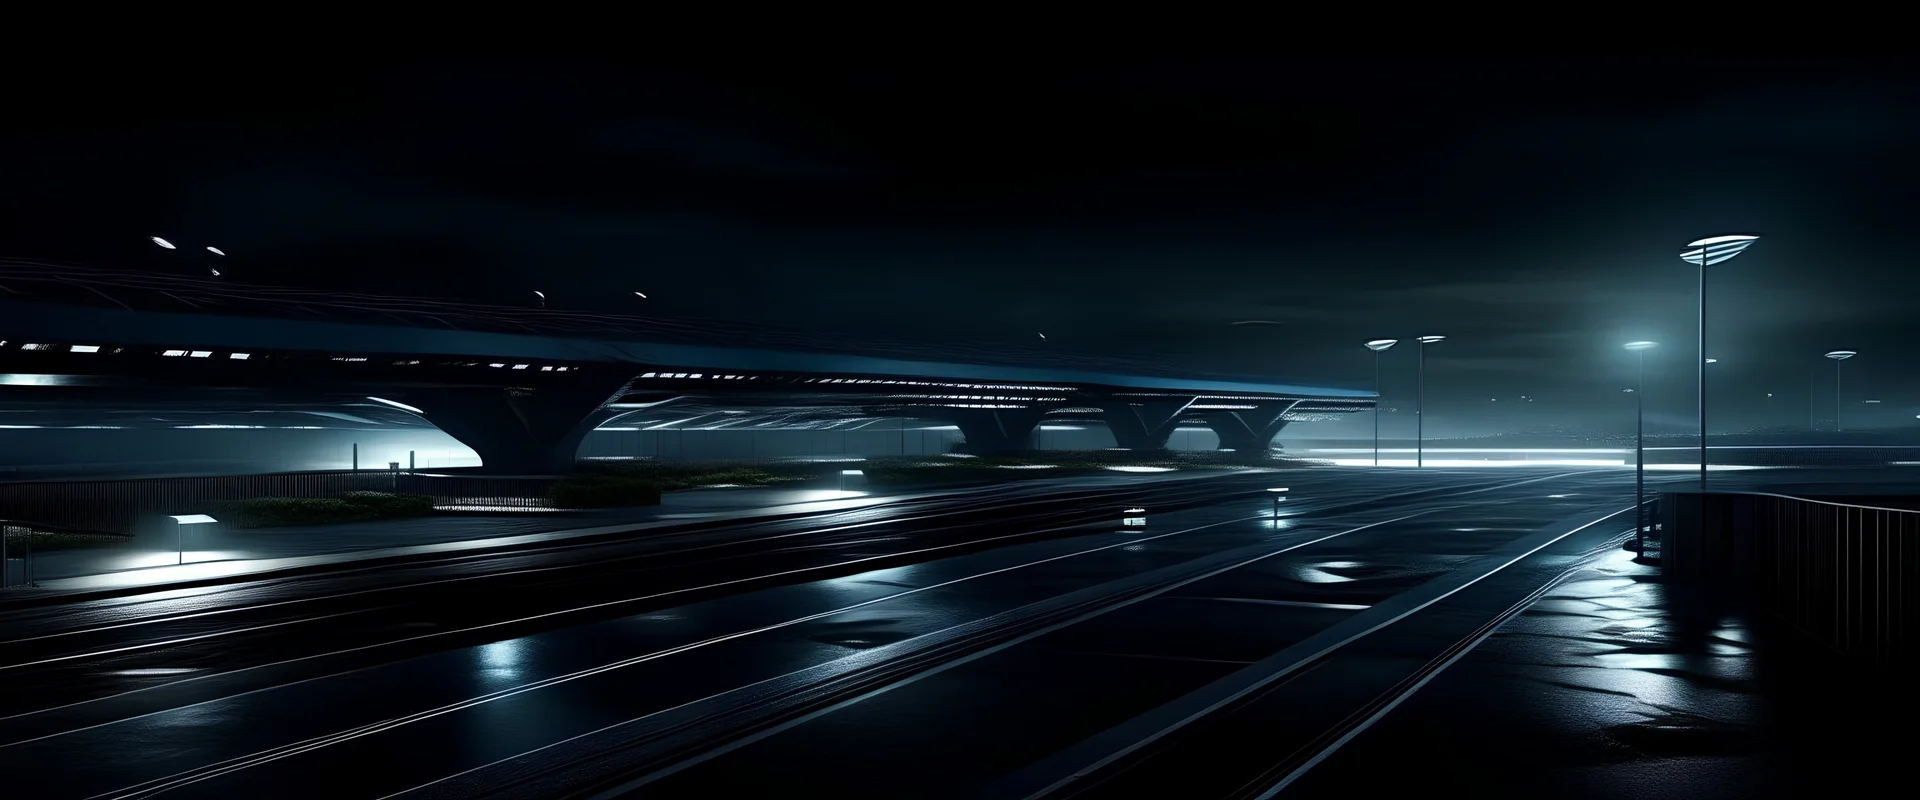 A future airport in dark night